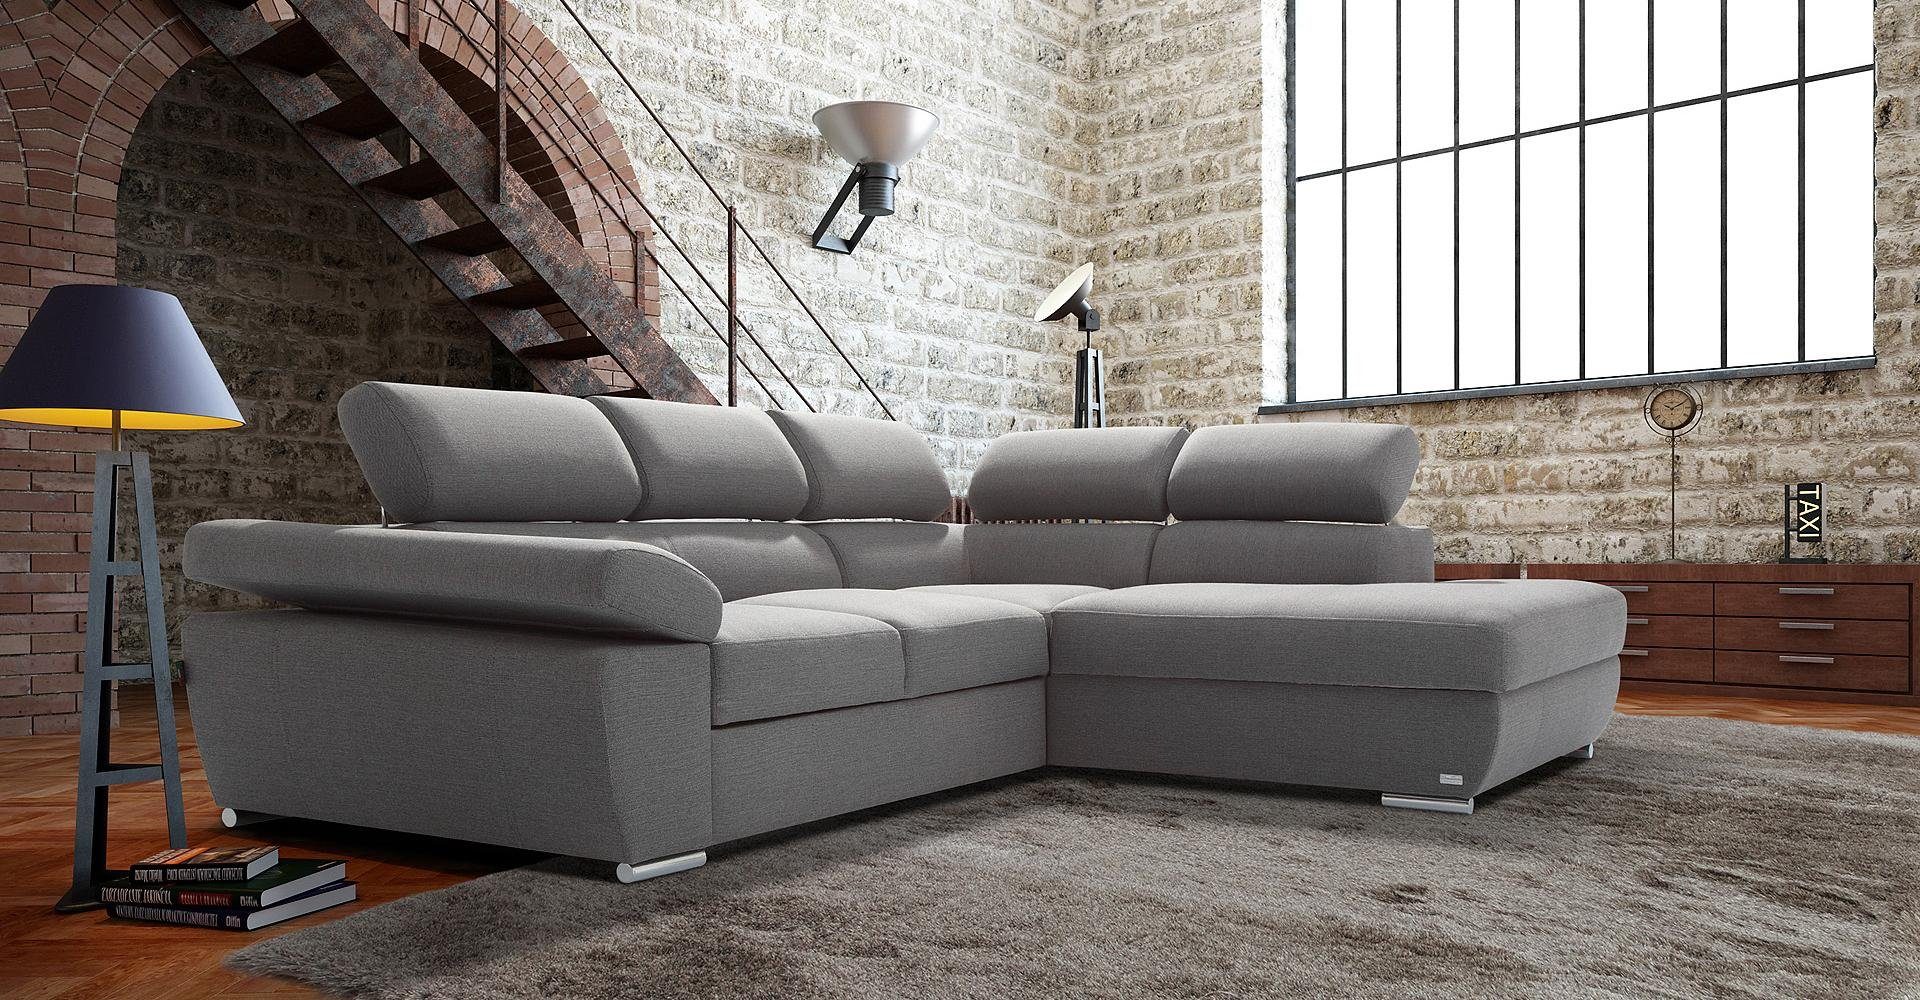 JVmoebel Ecksofa Bettkasten Bettfunktion Ecksofa Stoff L-Form Couch, Made in Europe